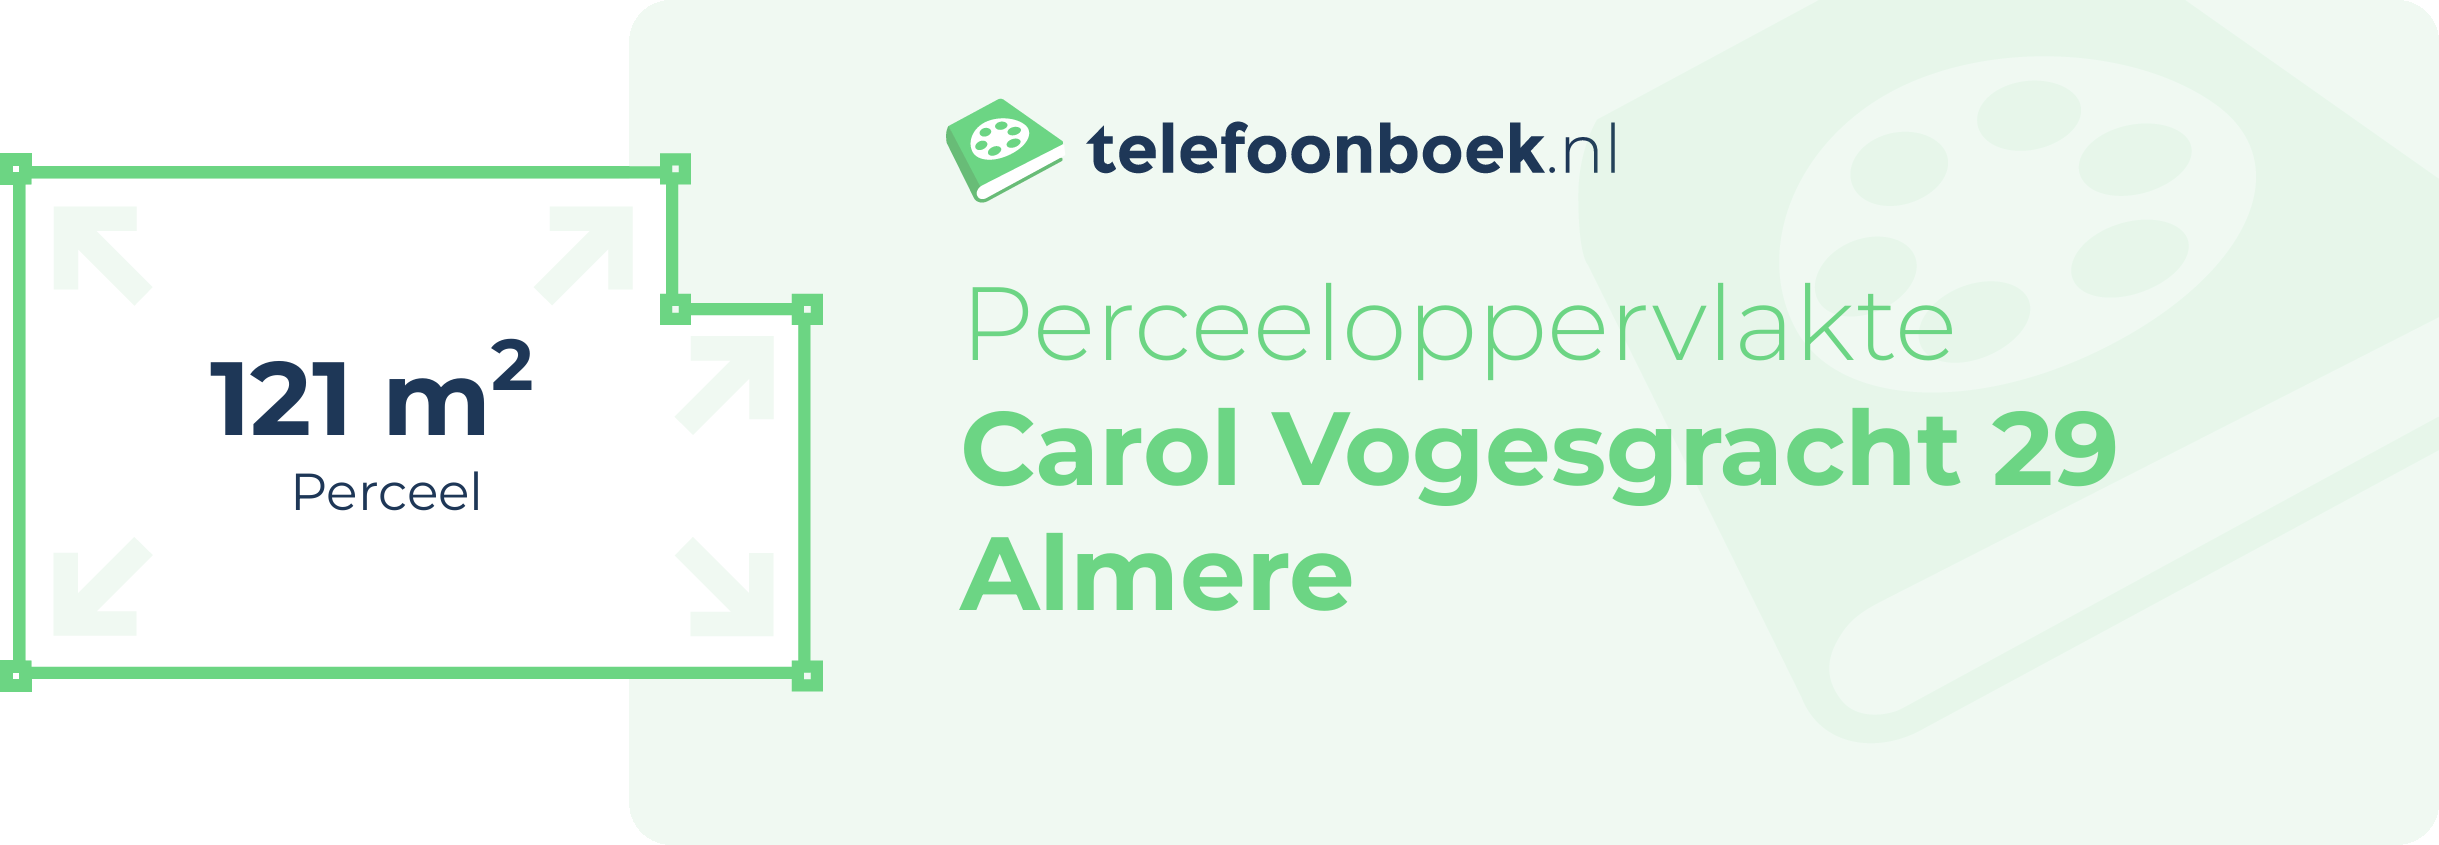 Perceeloppervlakte Carol Vogesgracht 29 Almere